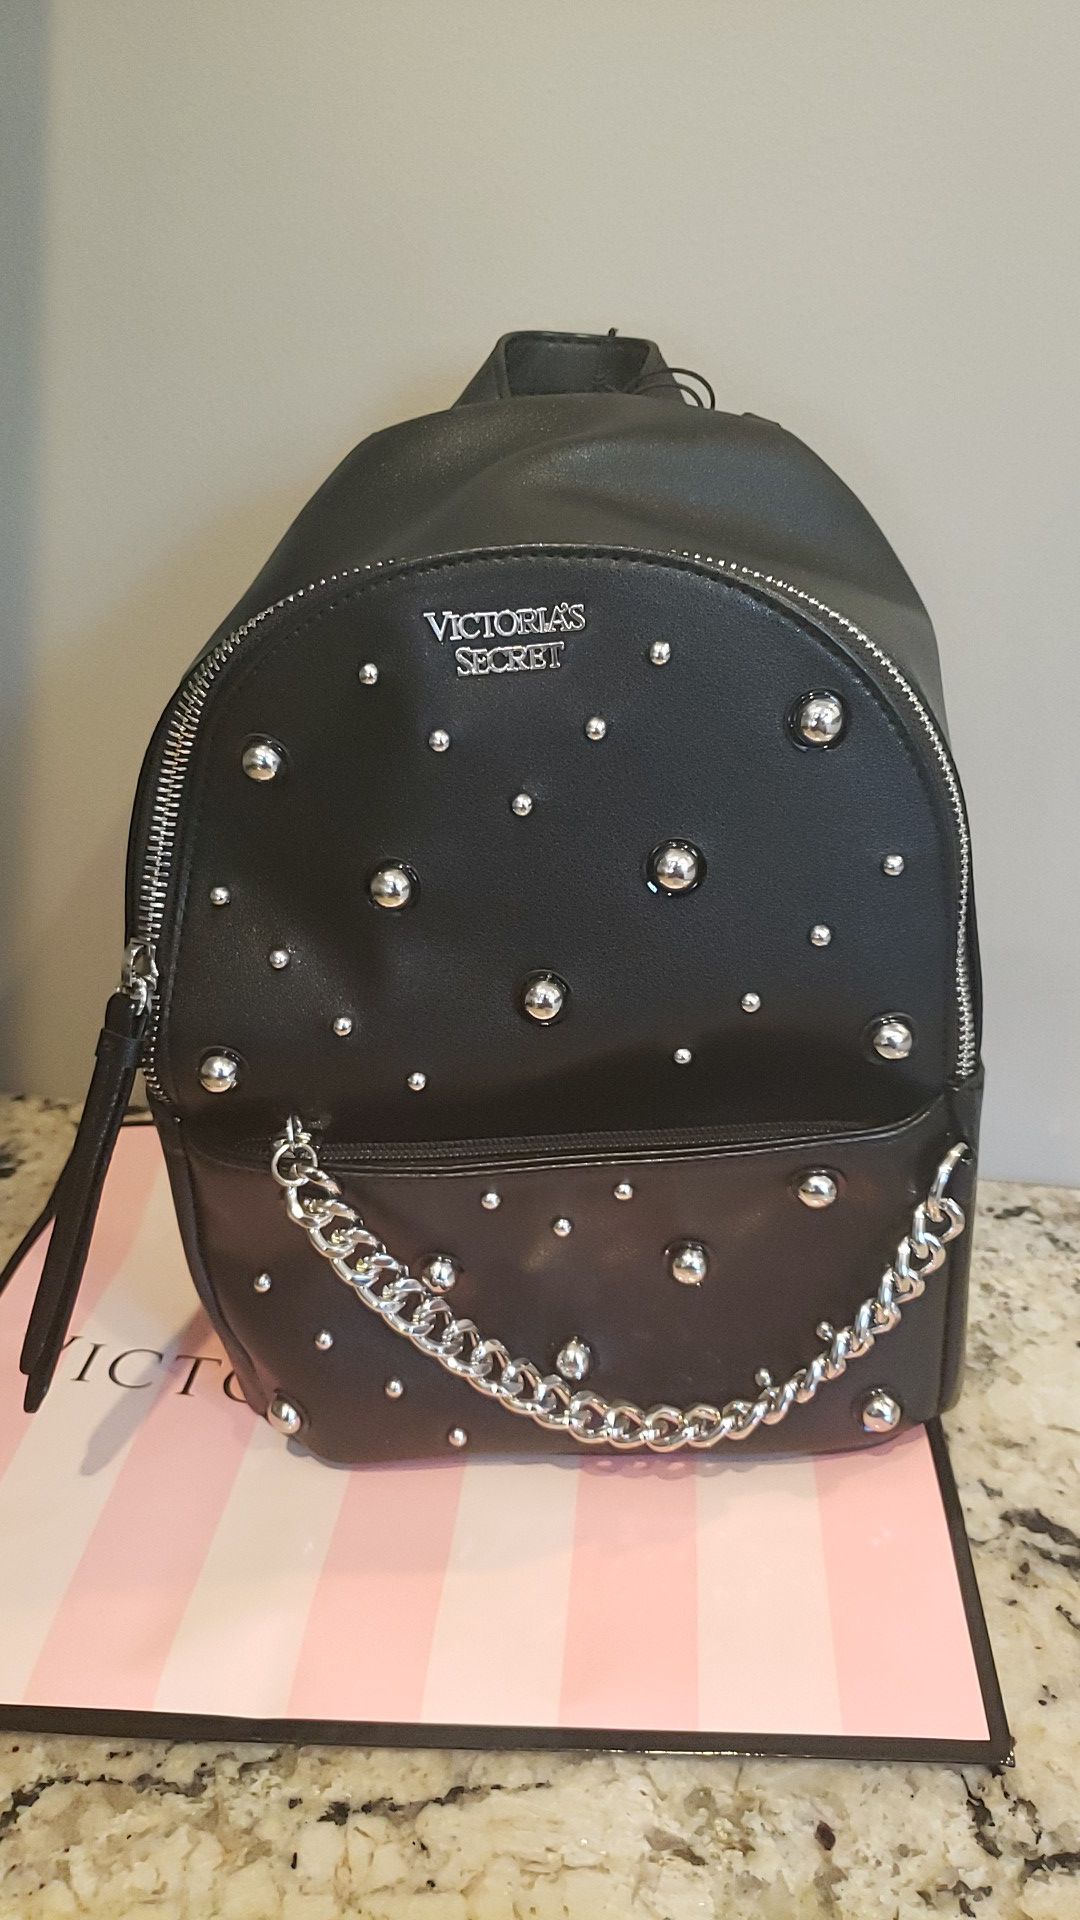 VICTORIA'S SECRET mini backpack